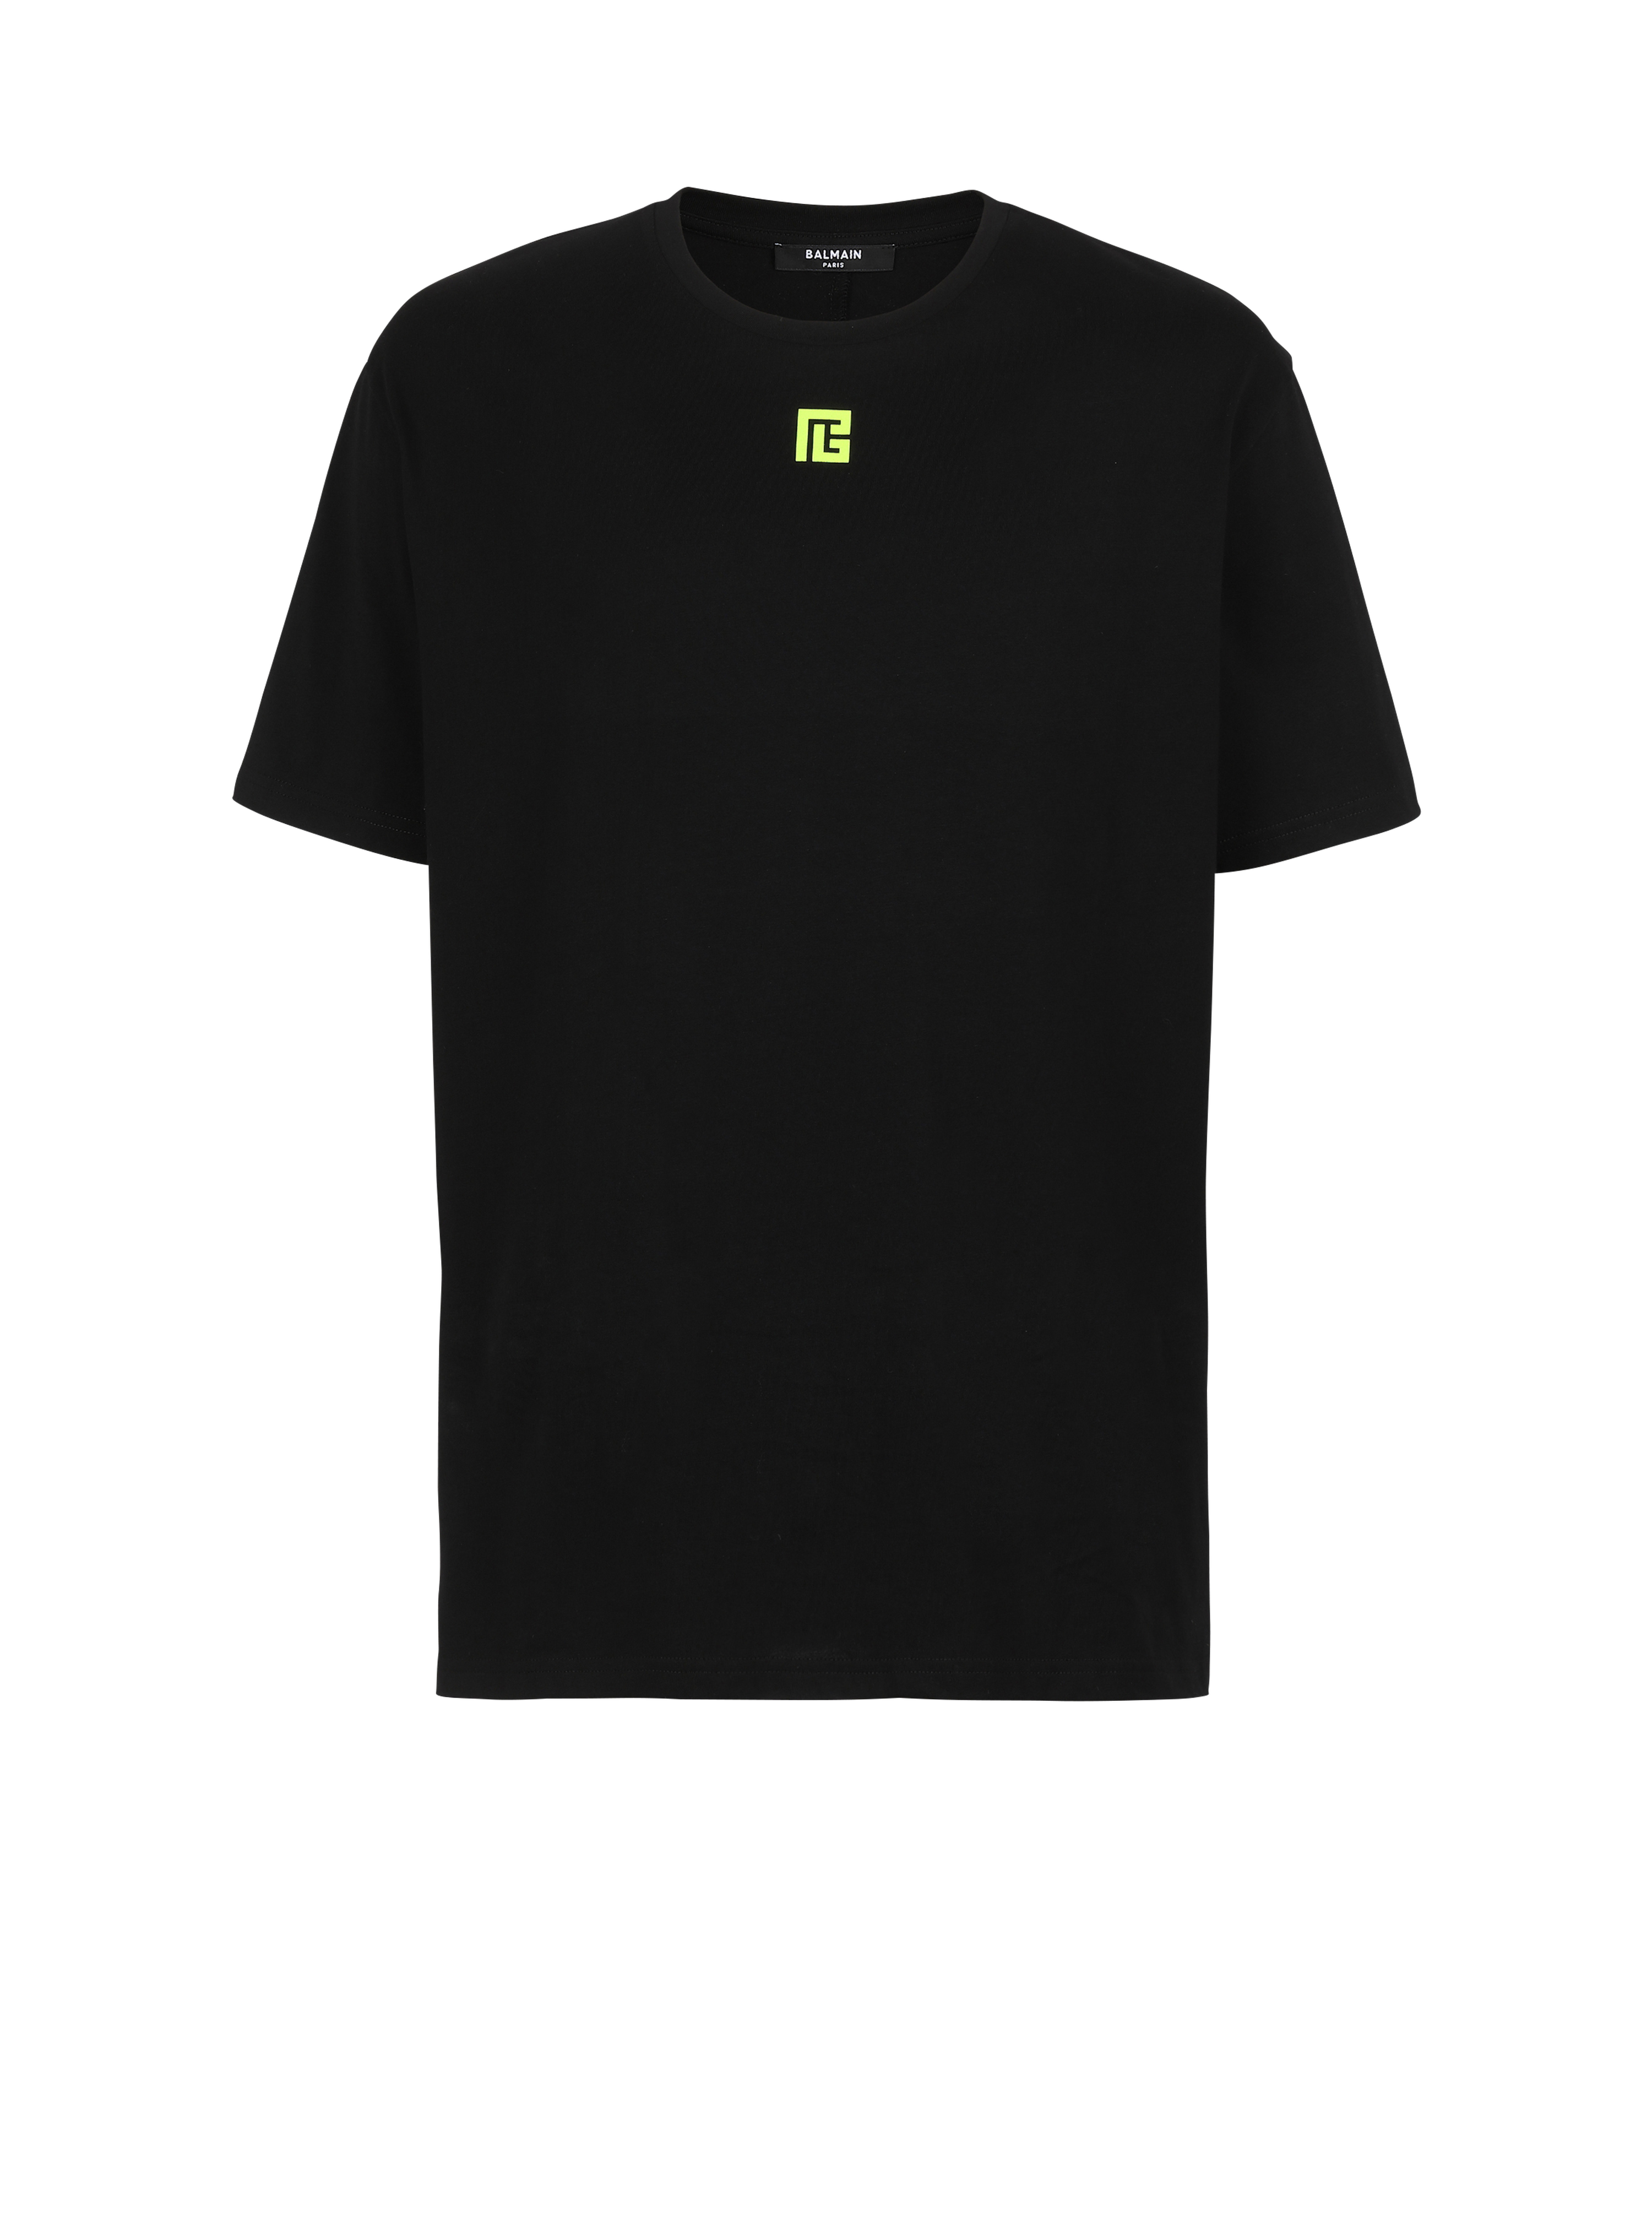 EXCLUSIVE - Cotton T-shirt with maxi Balmain logo print on back, black